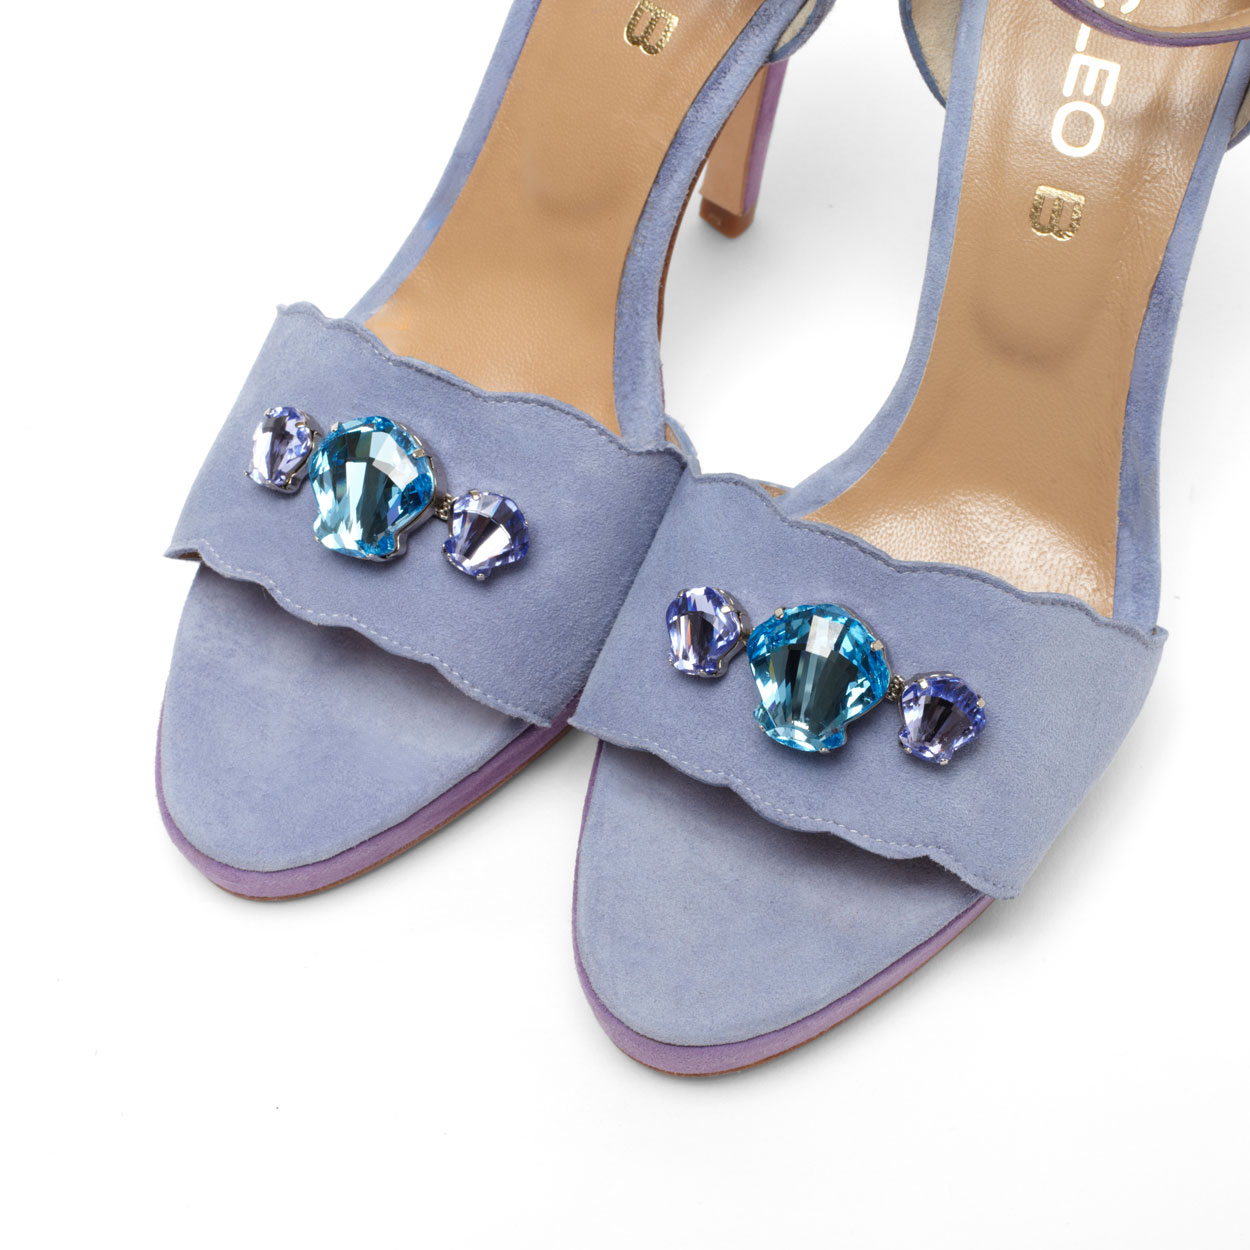 pepper-blue-lilac-toe-shoes-shoe-shopping-luxury-cleob-designer-design-london.jpg